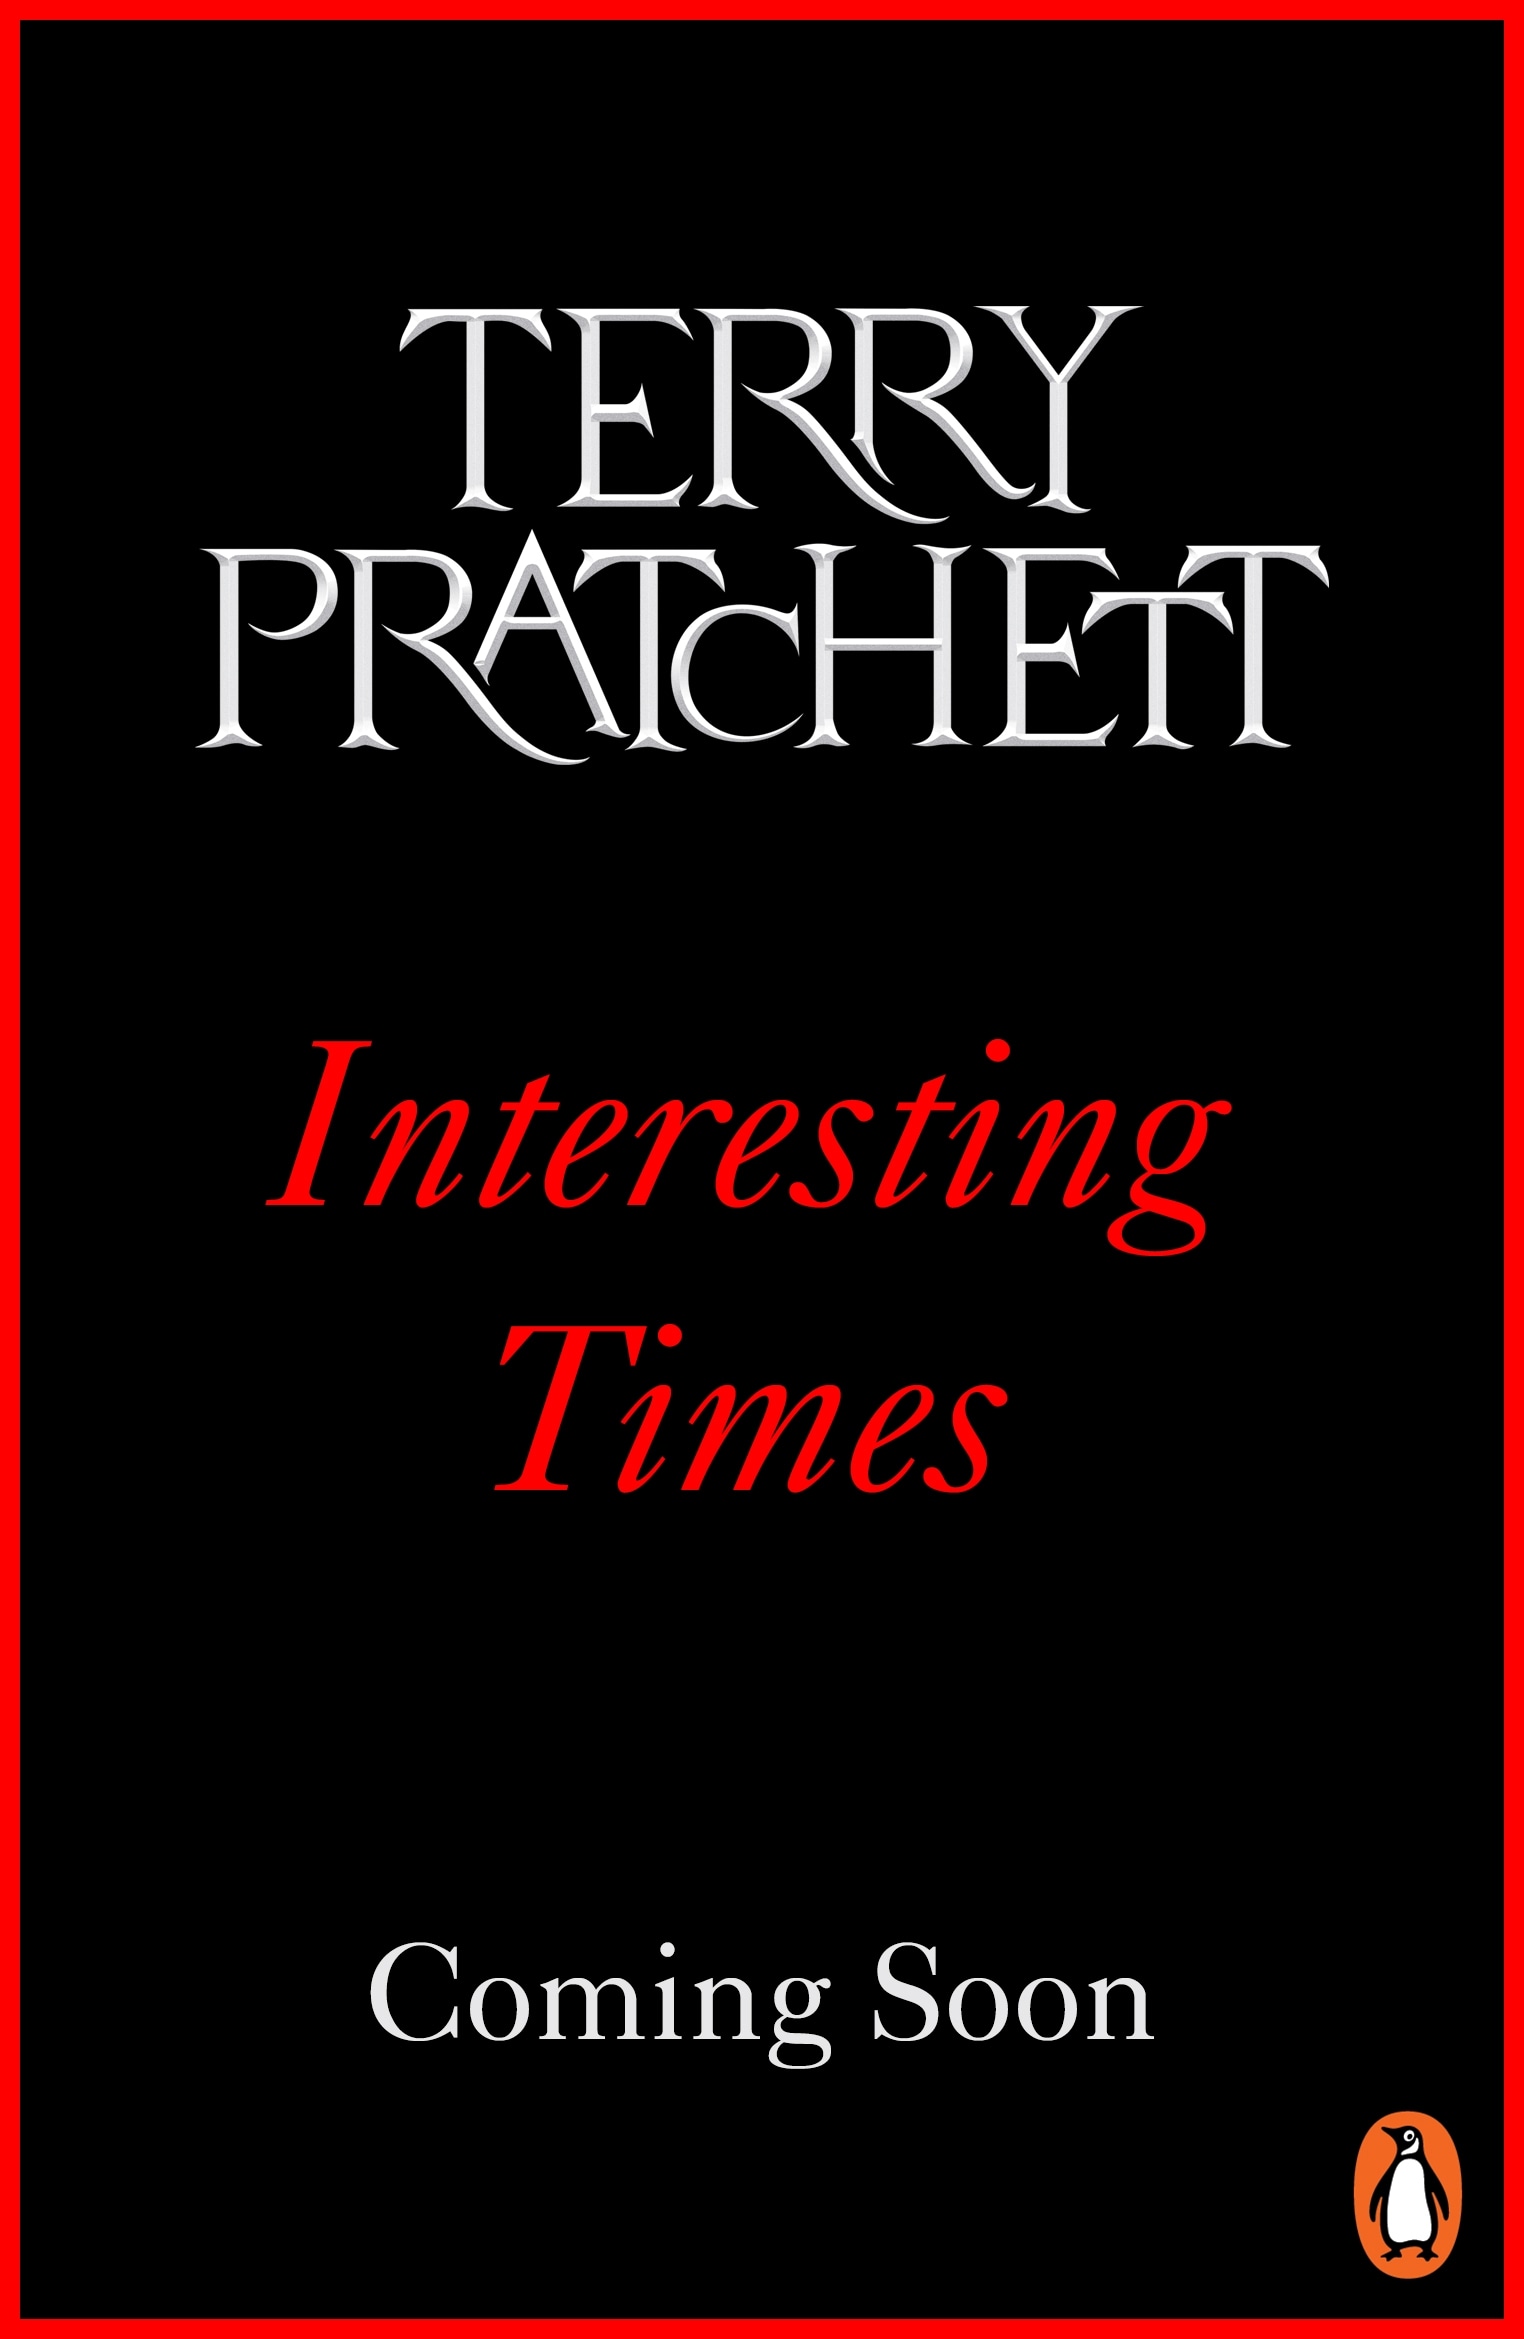 Book “Interesting Times” by Terry Pratchett — July 28, 2022